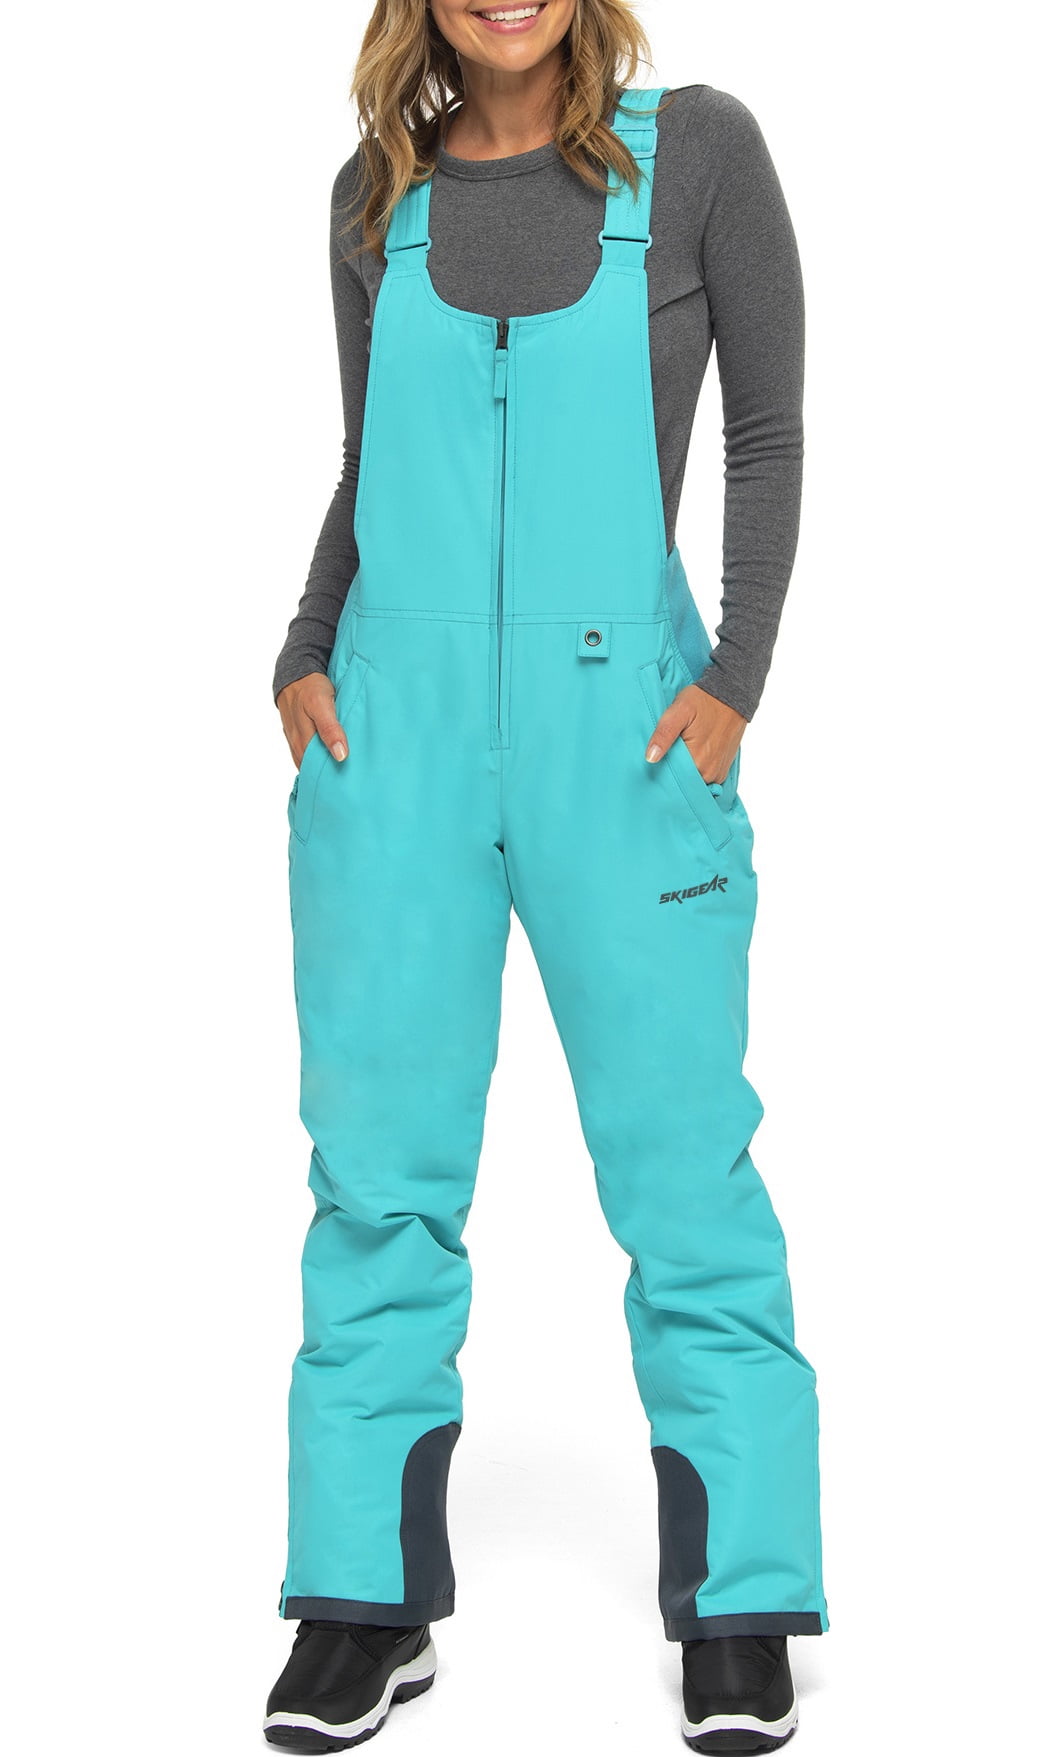 SkiGear by Arctix Women's and Plus Size Winter Snow Bib Overall Pant -  Walmart.com